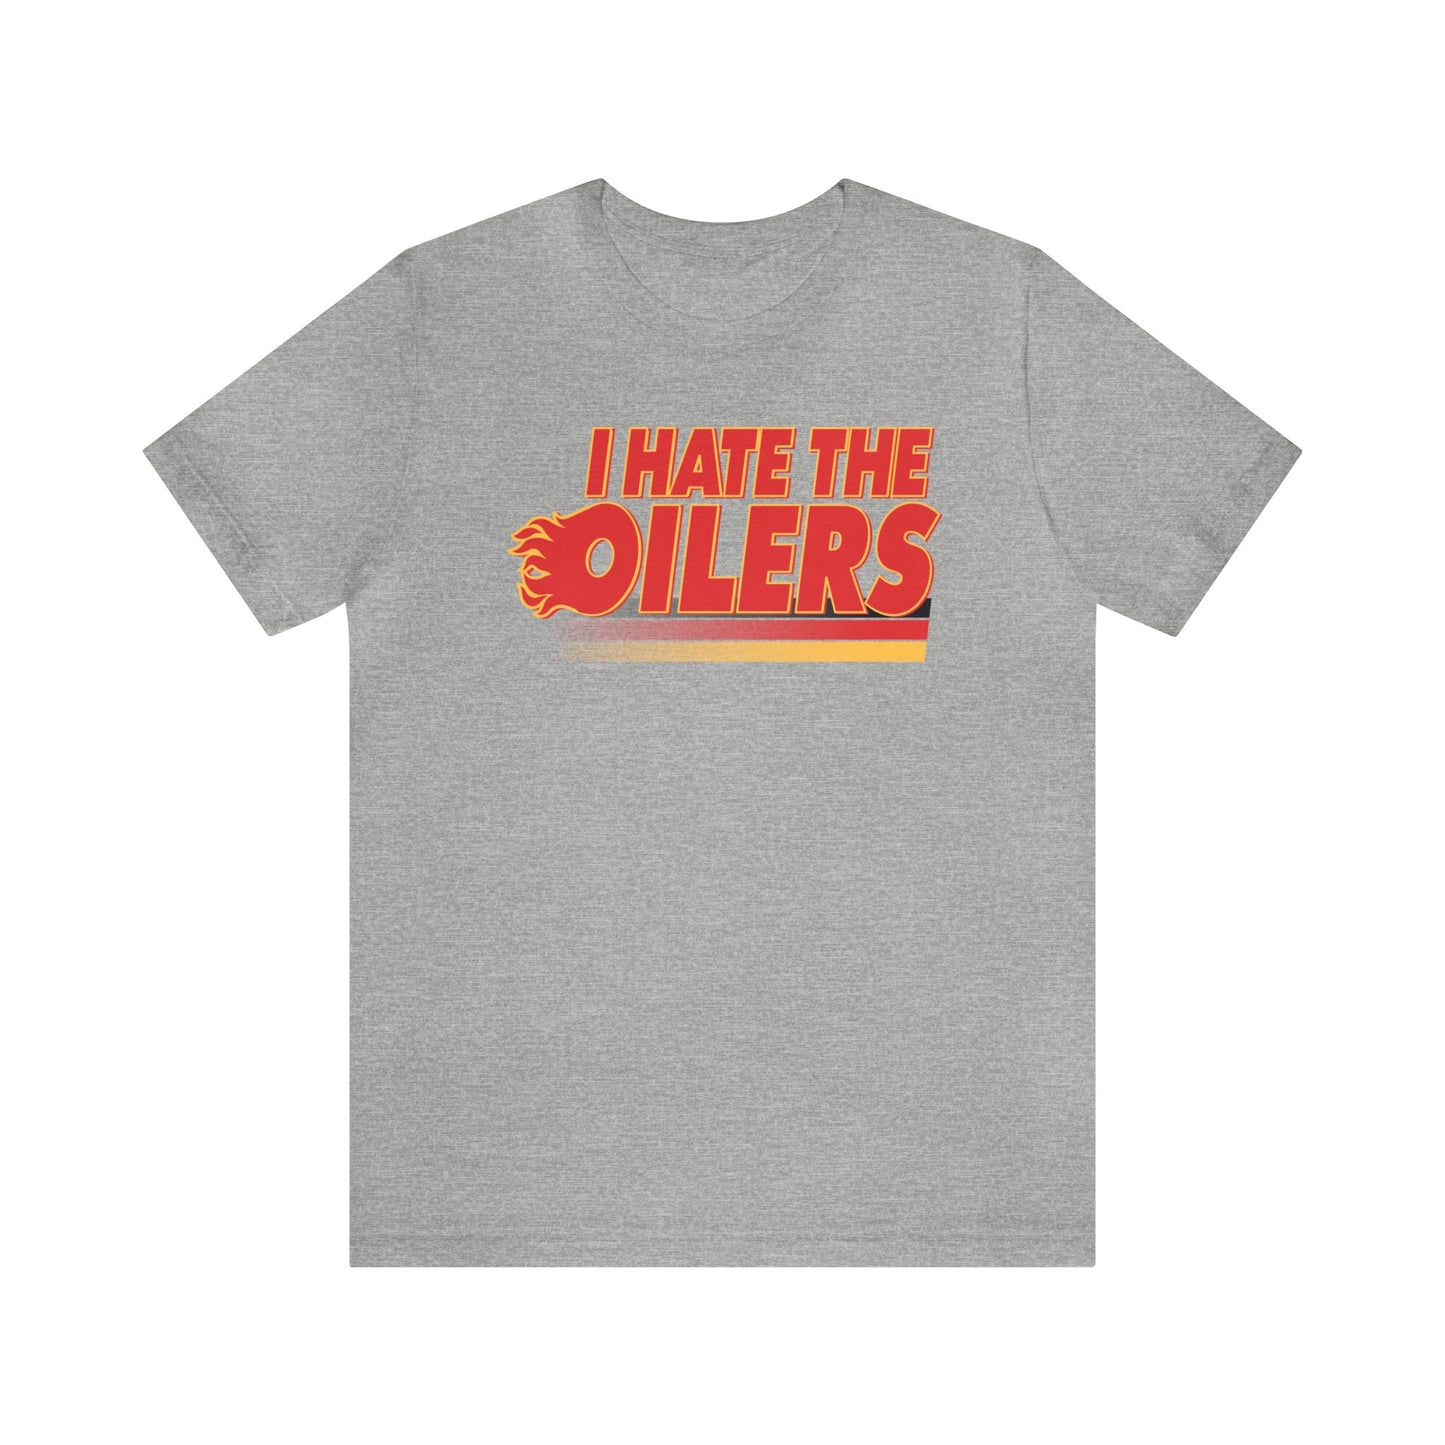 The OylErs Suck (for Calgary fans) - Unisex Jersey Short Sleeve Tee